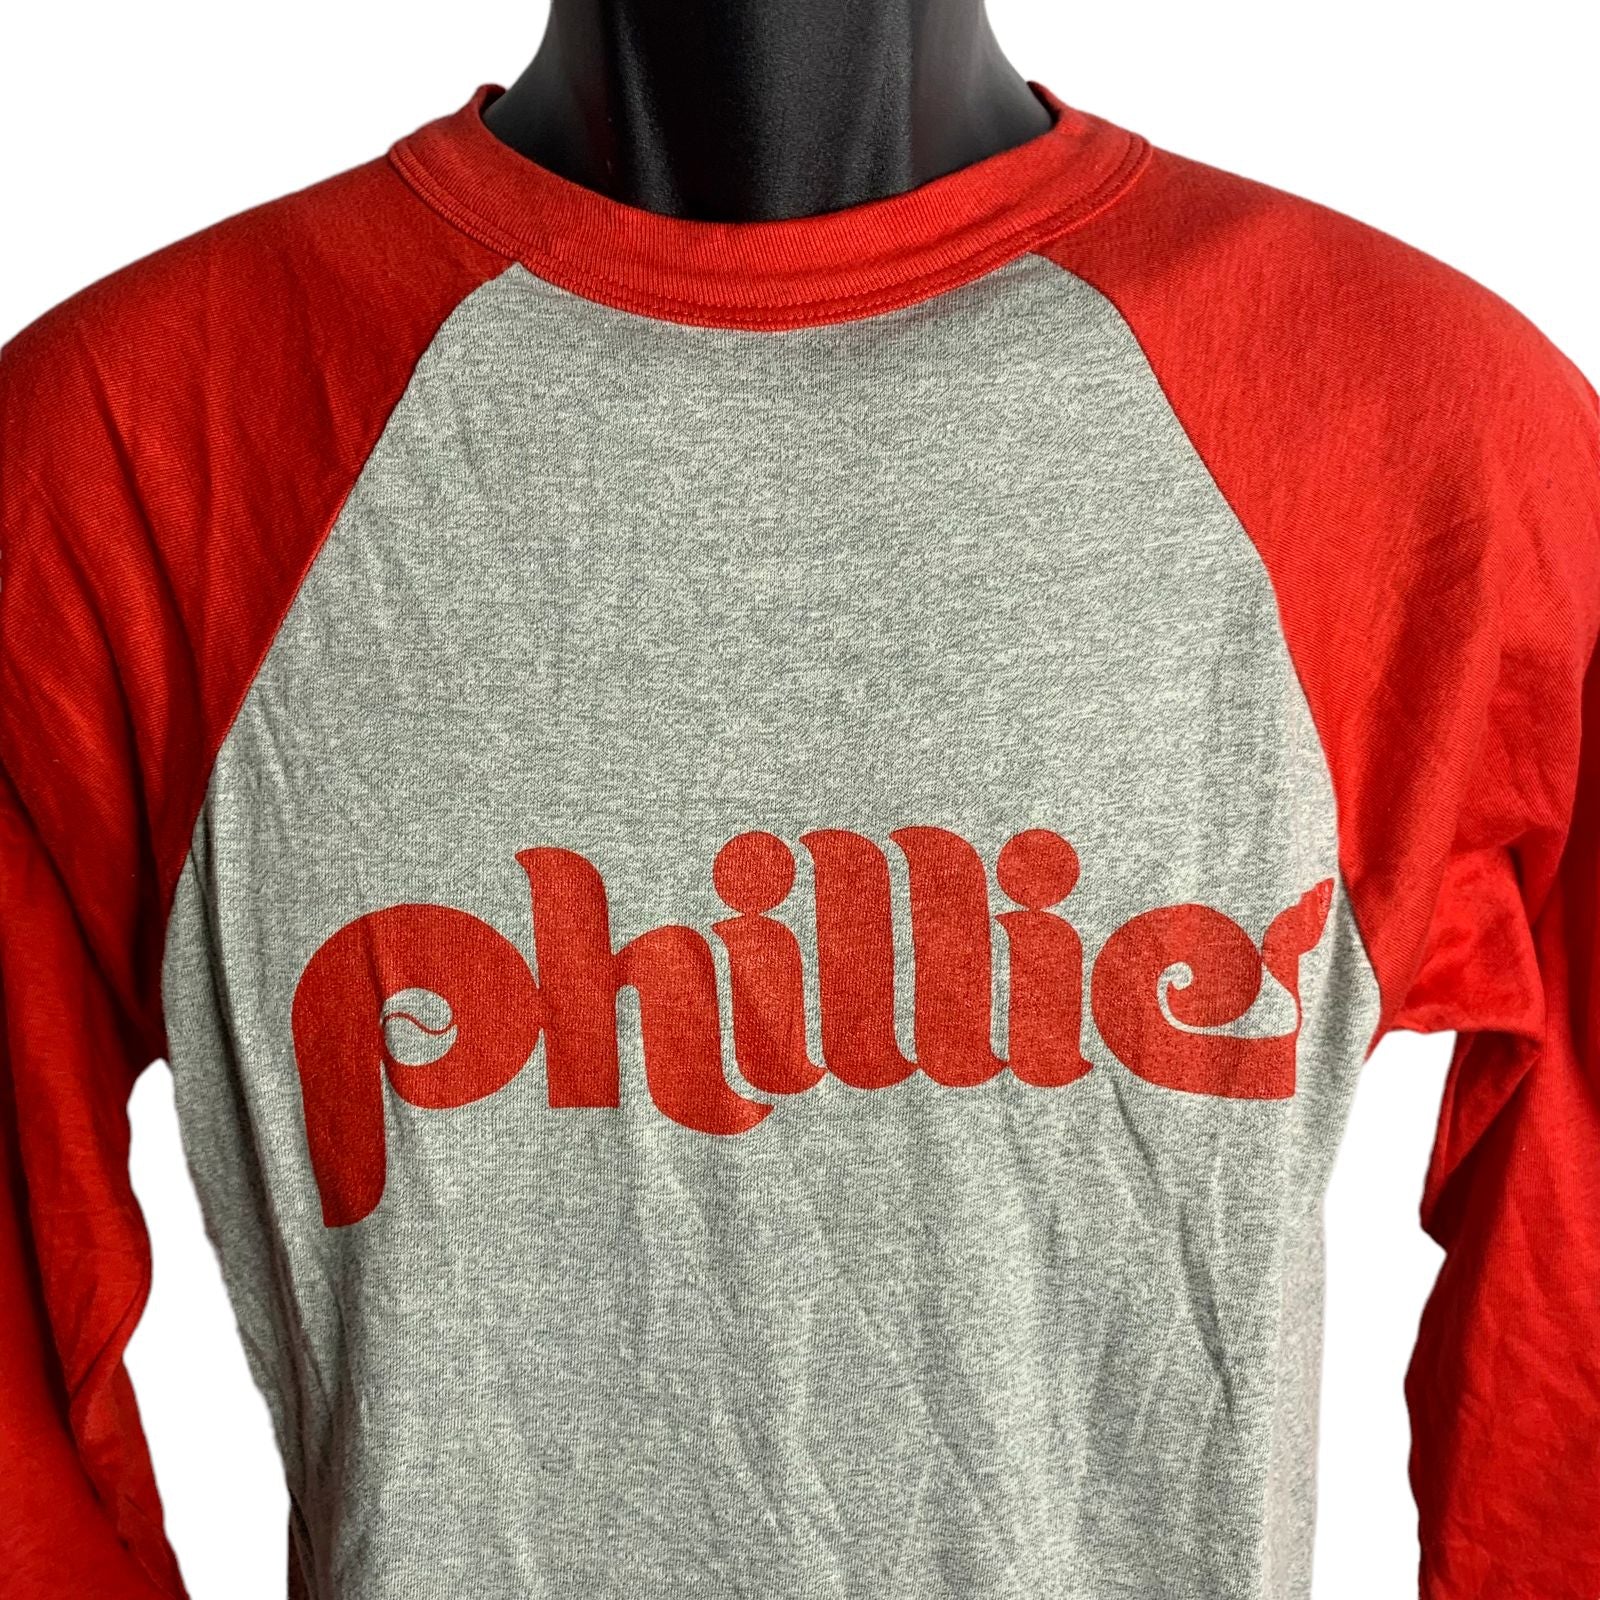 Vintage Mens Phillies Baseball Shirt S Gray Single Stitch Crewneck Rag